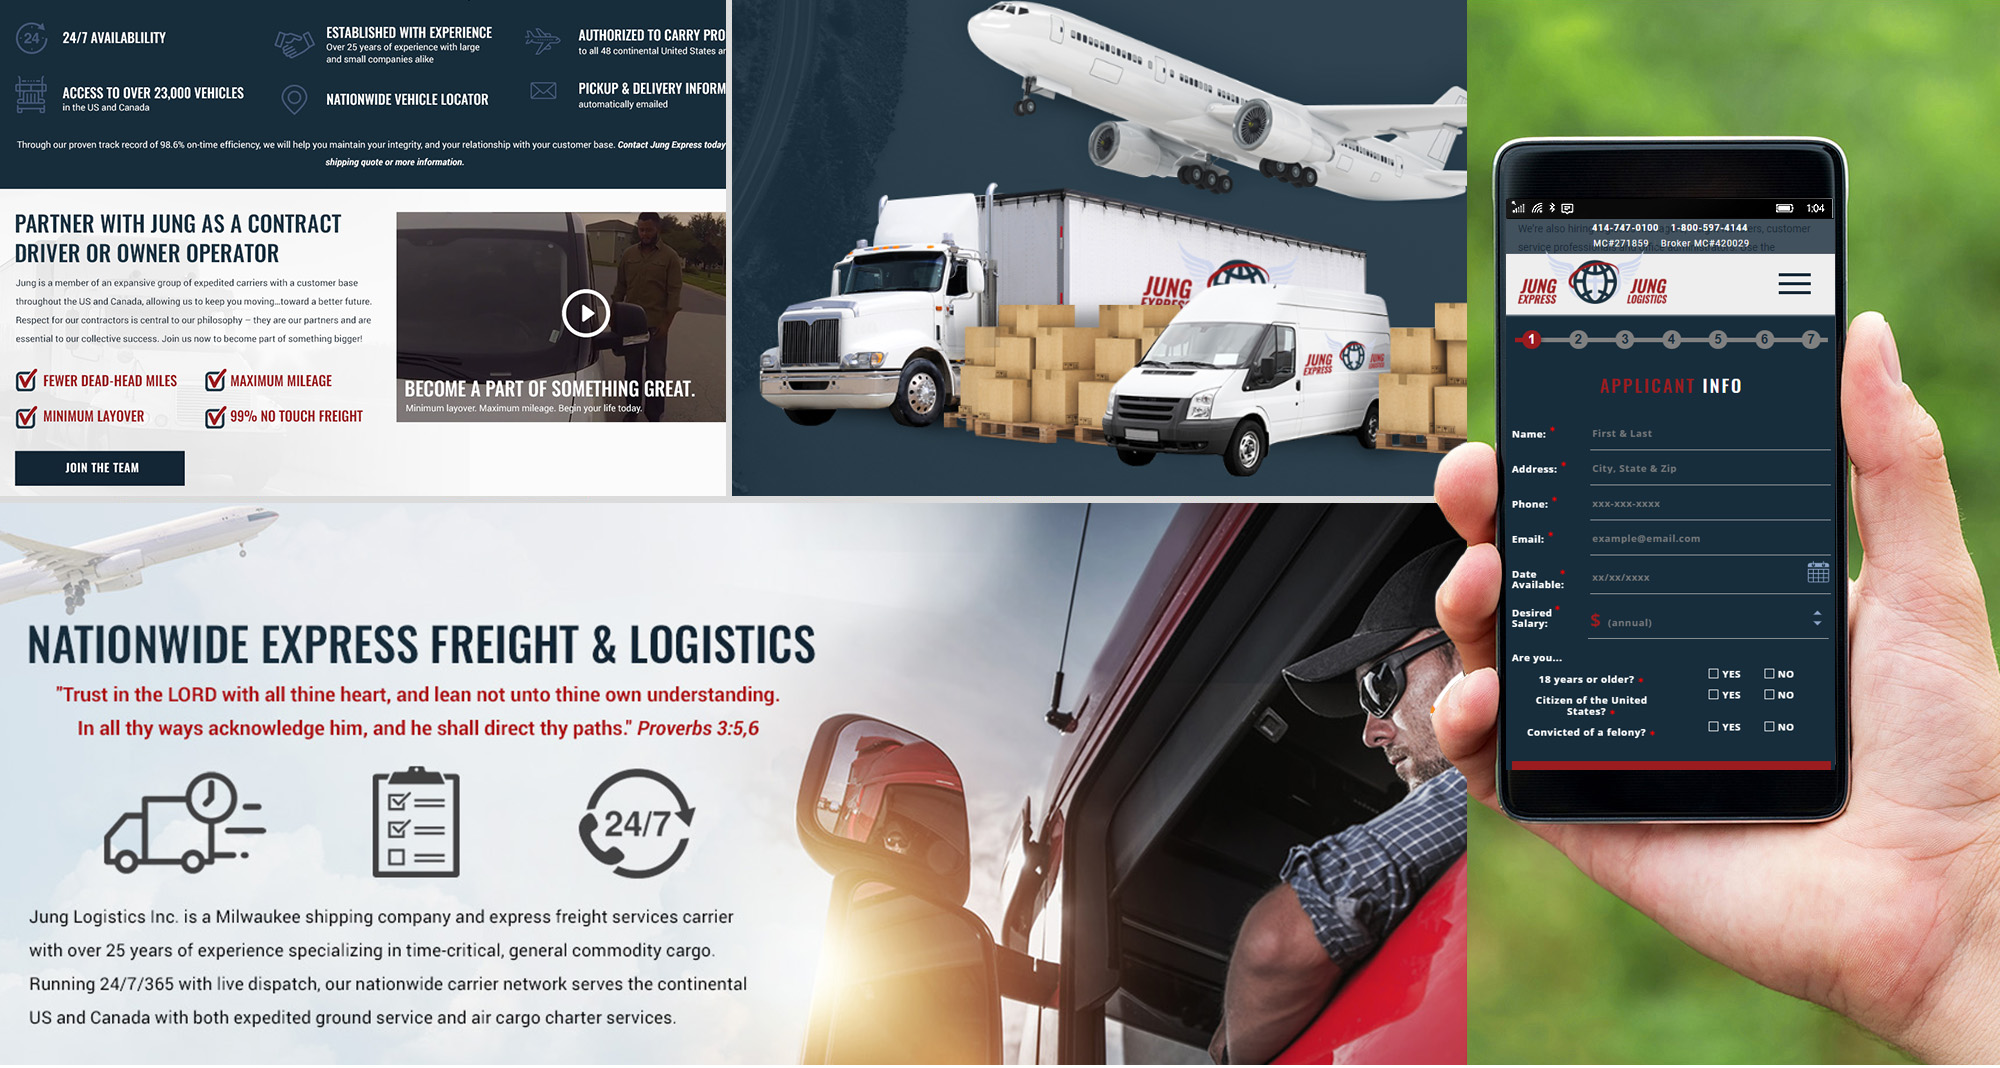 Milwaukee web marketing for Jung Logistics